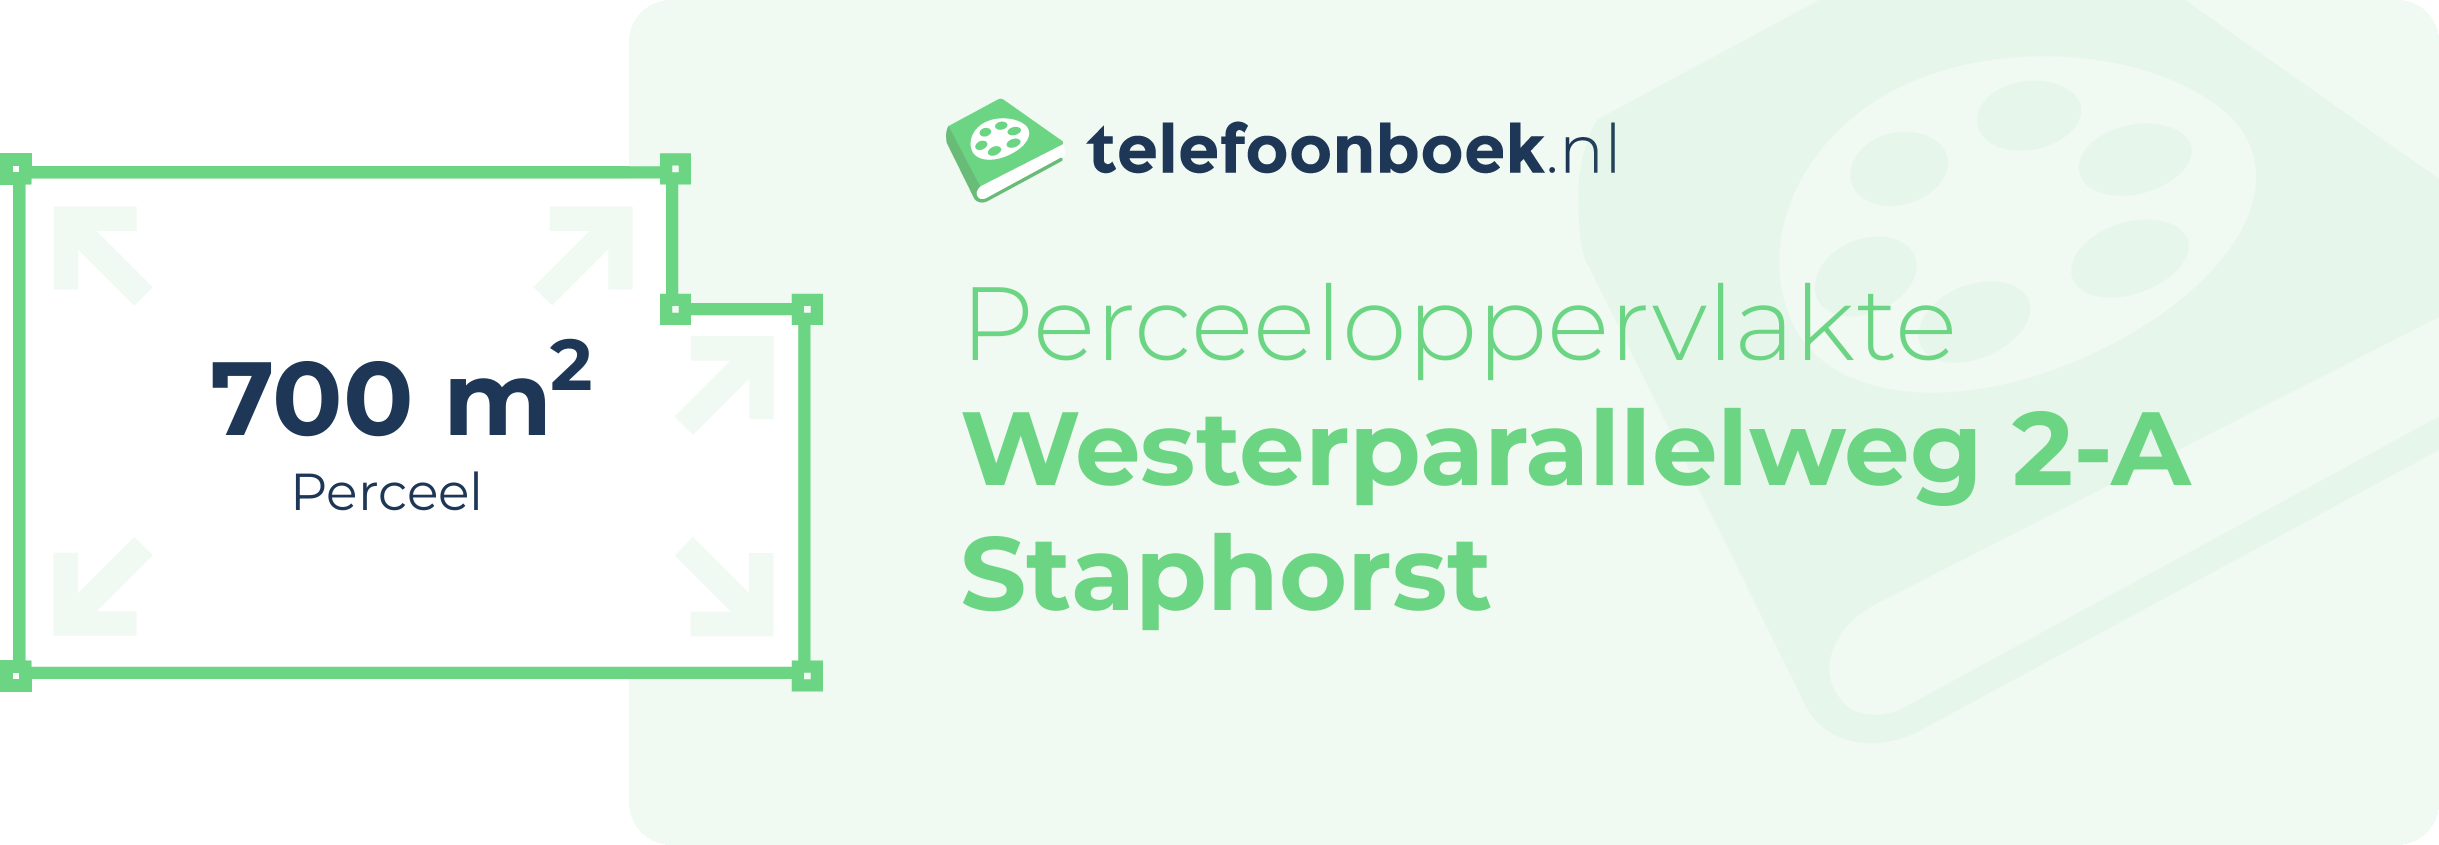 Perceeloppervlakte Westerparallelweg 2-A Staphorst